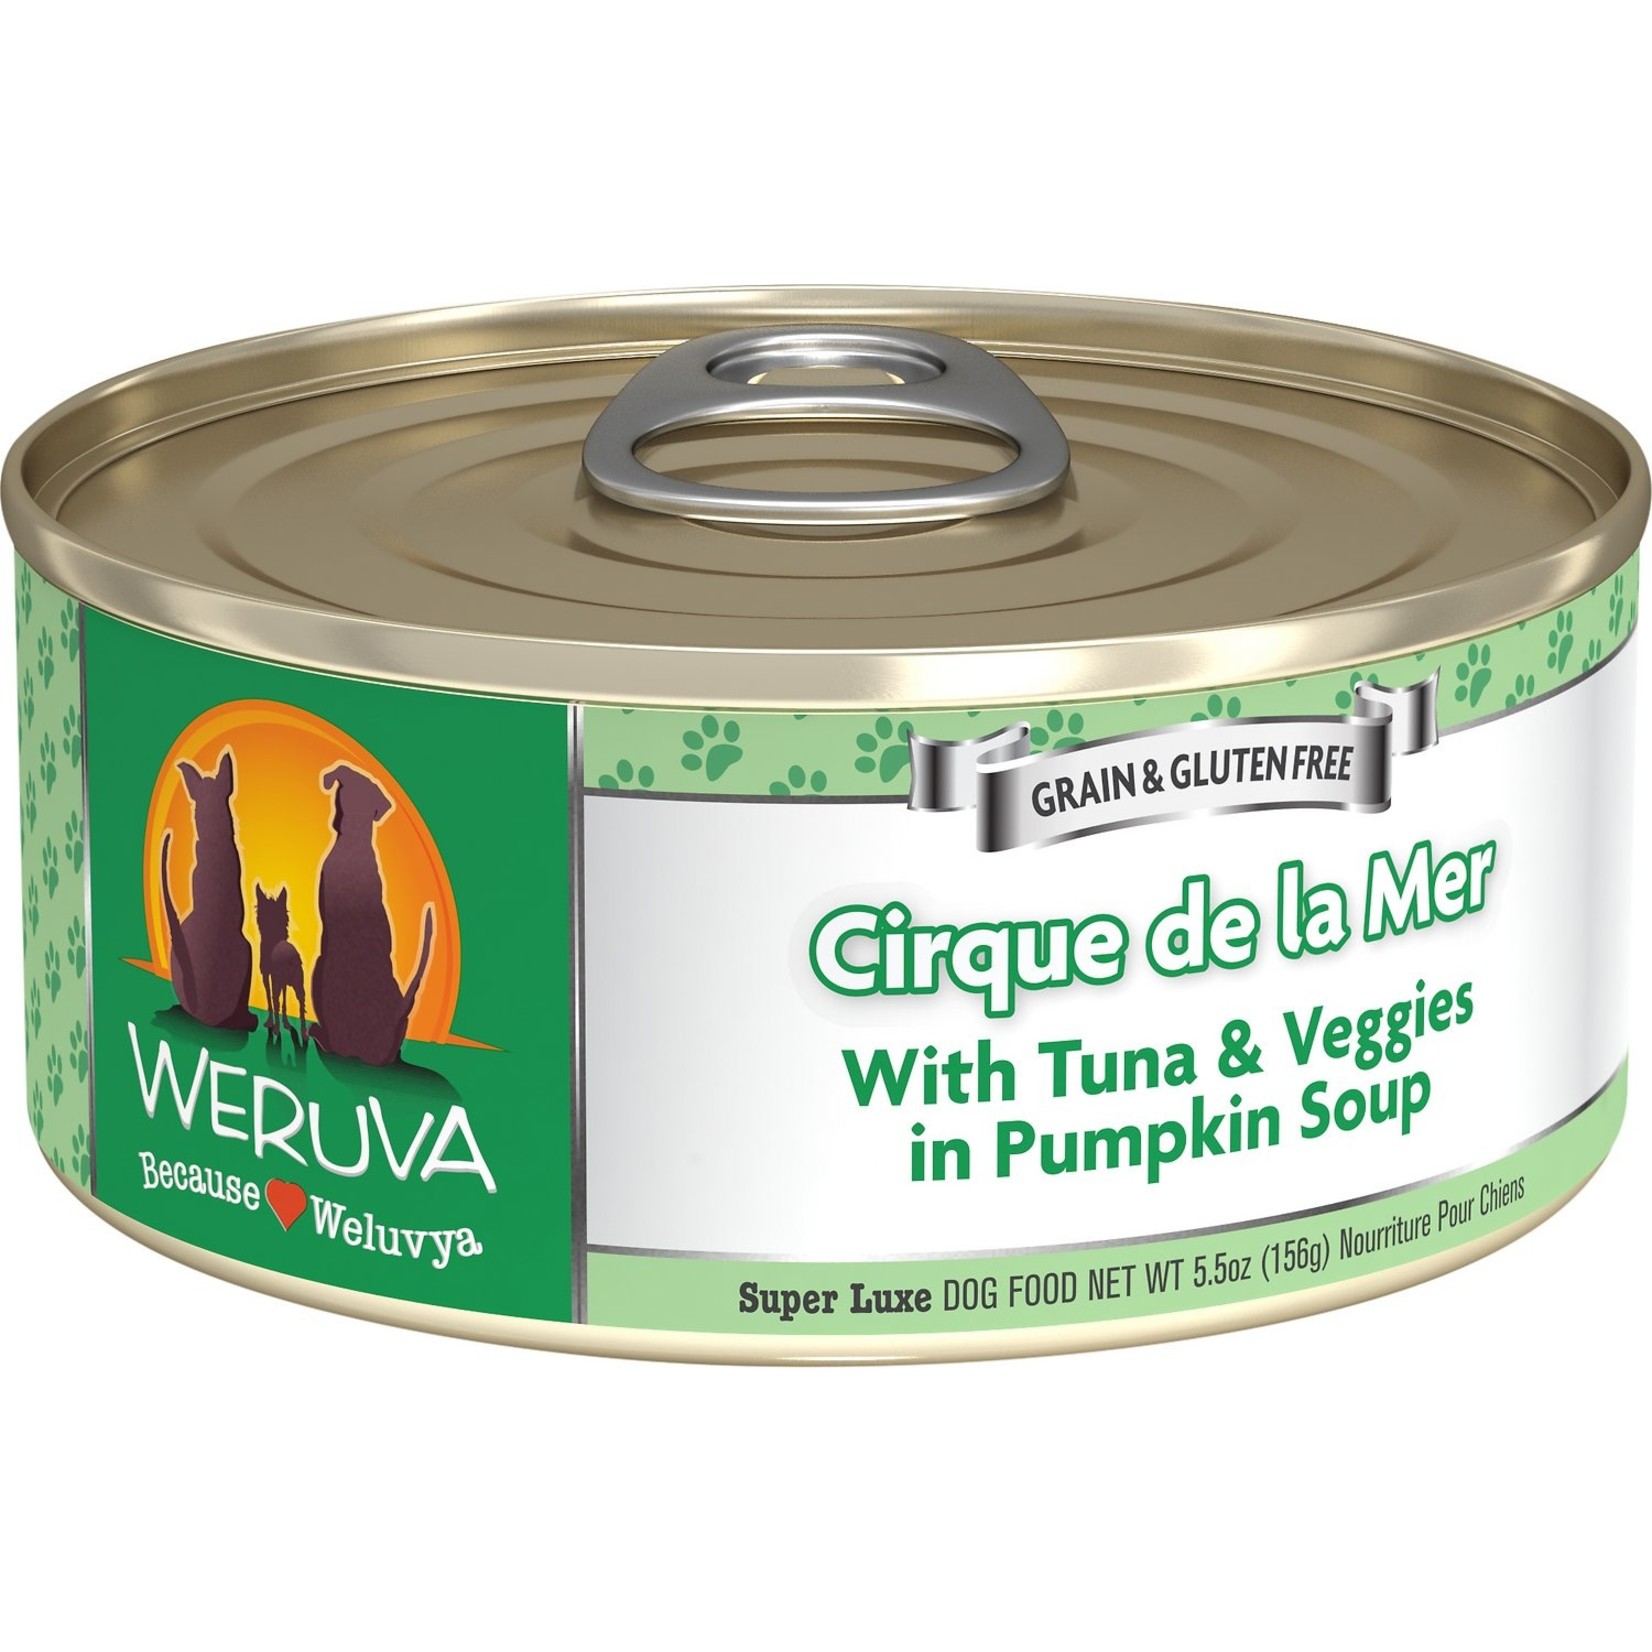 Weruva Weruva Classic Dog - Cirque de la Mer with Tuna & Veggies in Pumpkin Soup